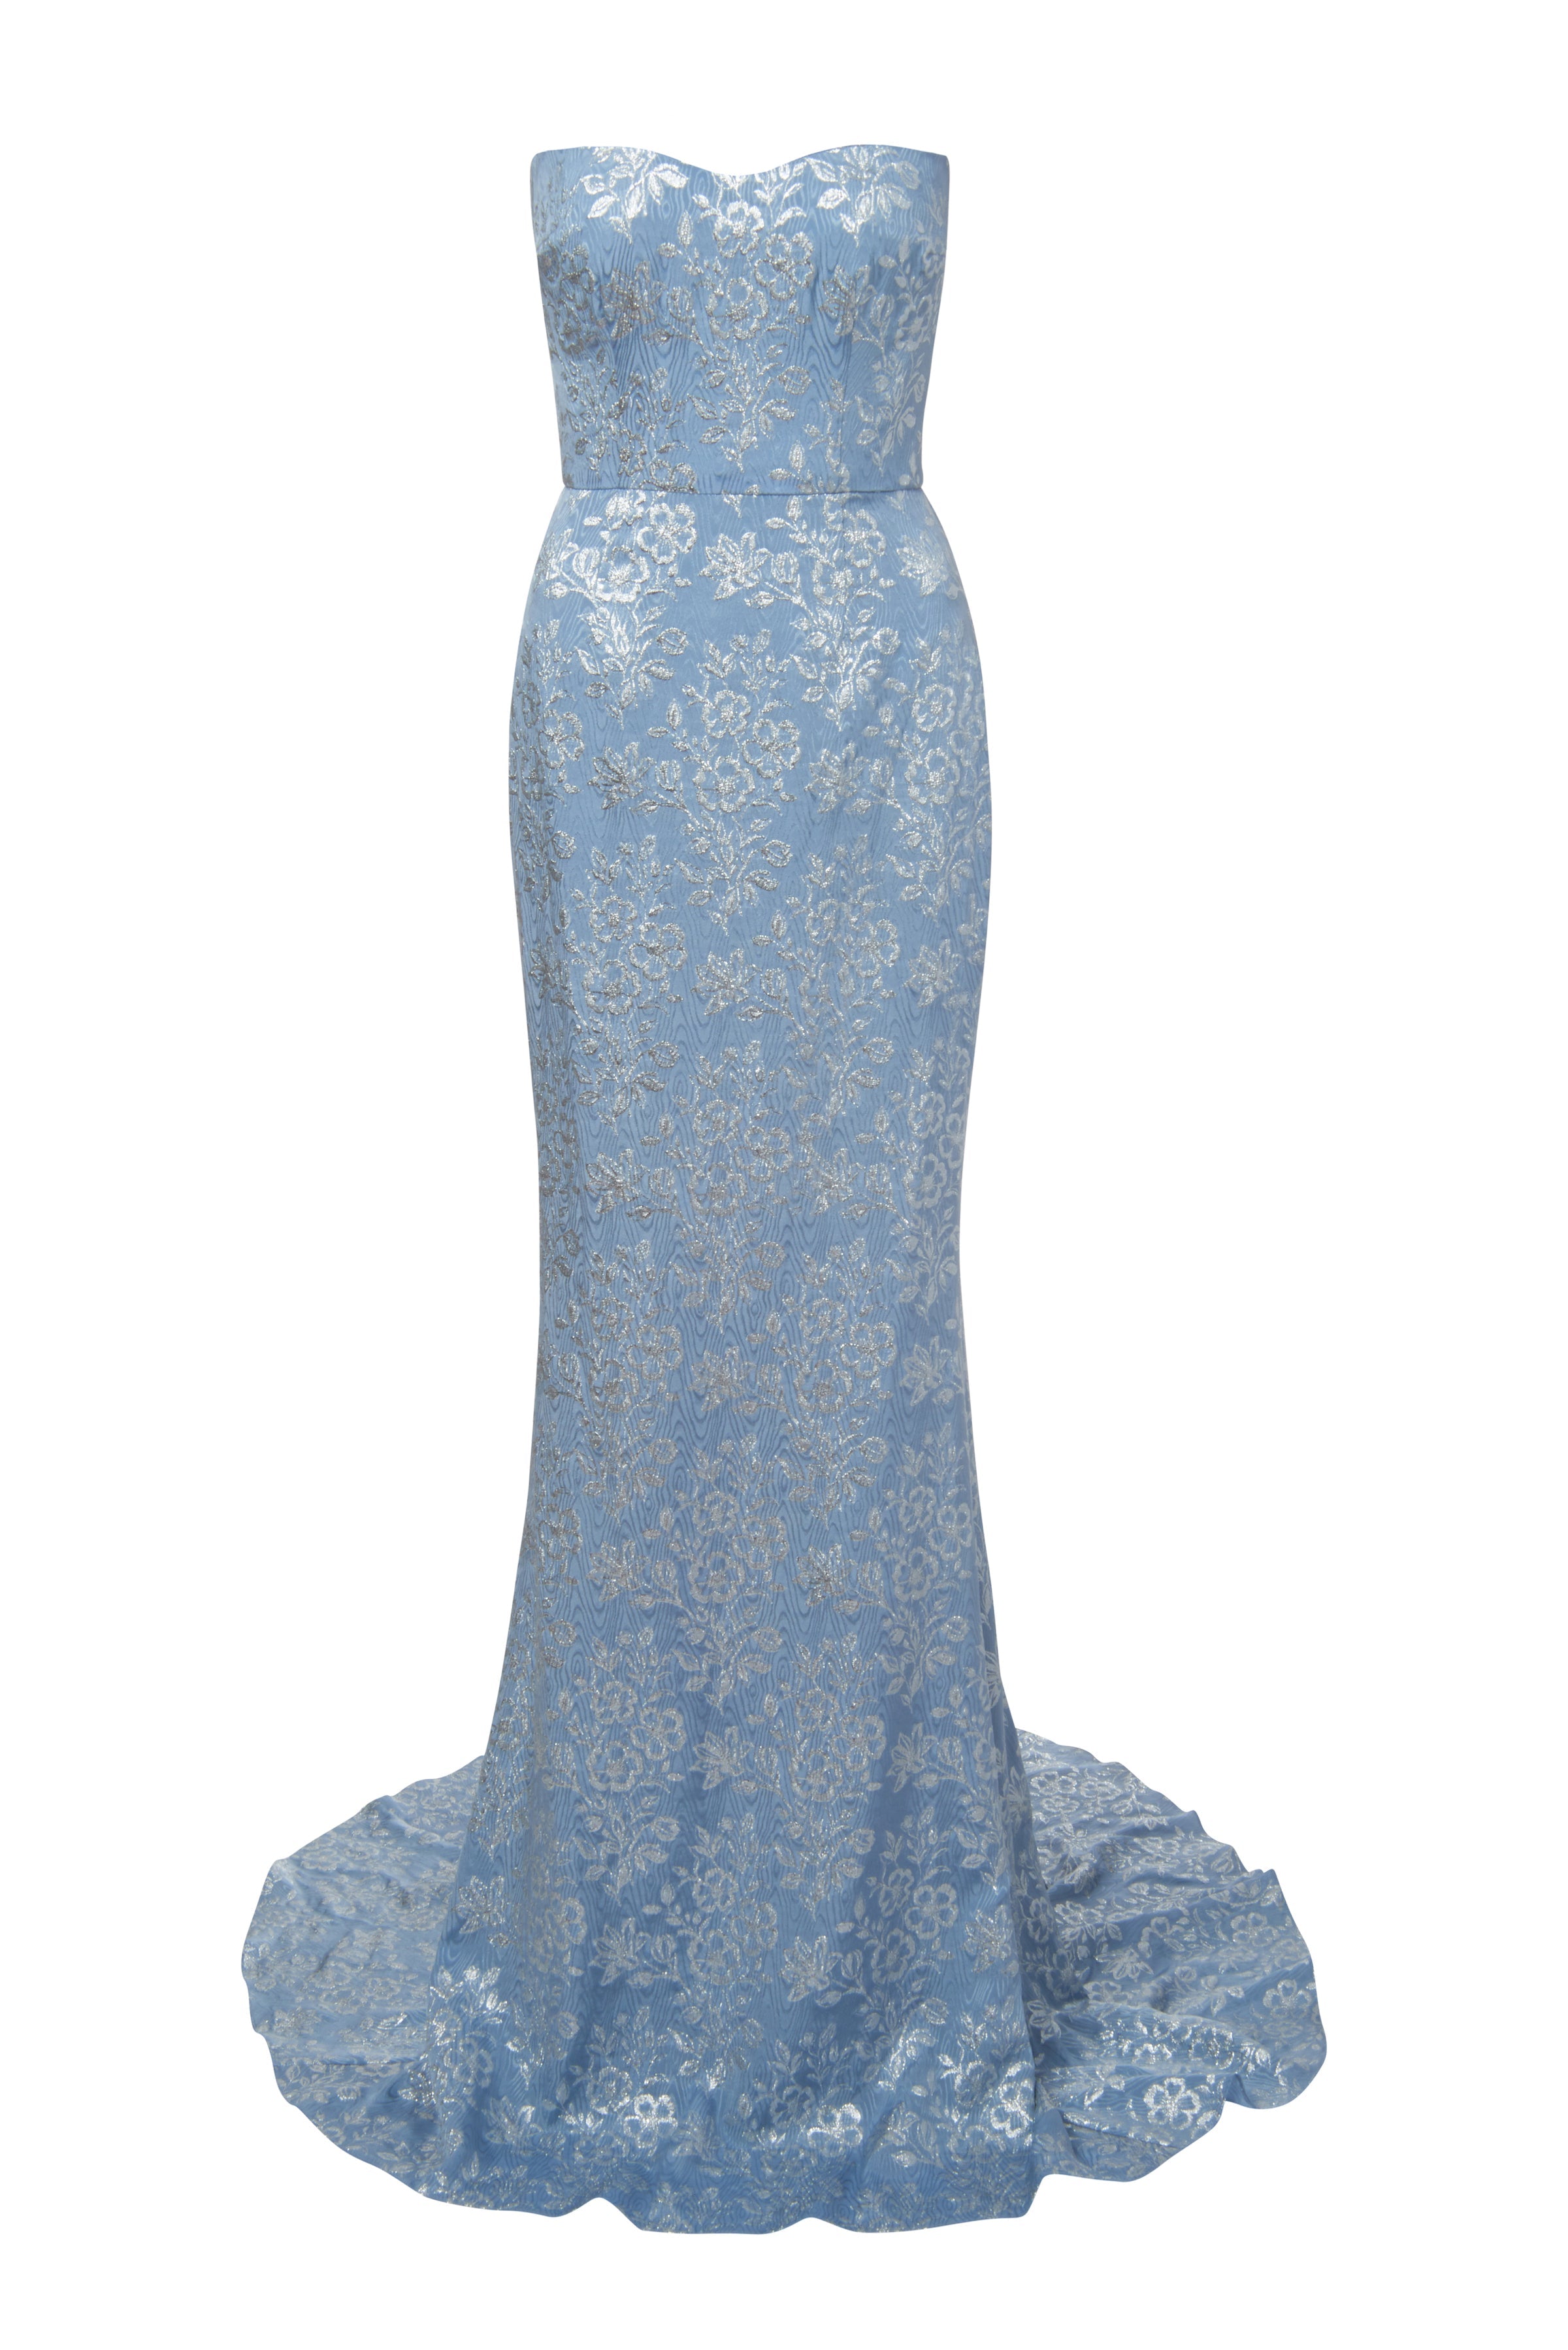 FINAL SALE: Leonora Blue Metallic Floral Strapless Gown